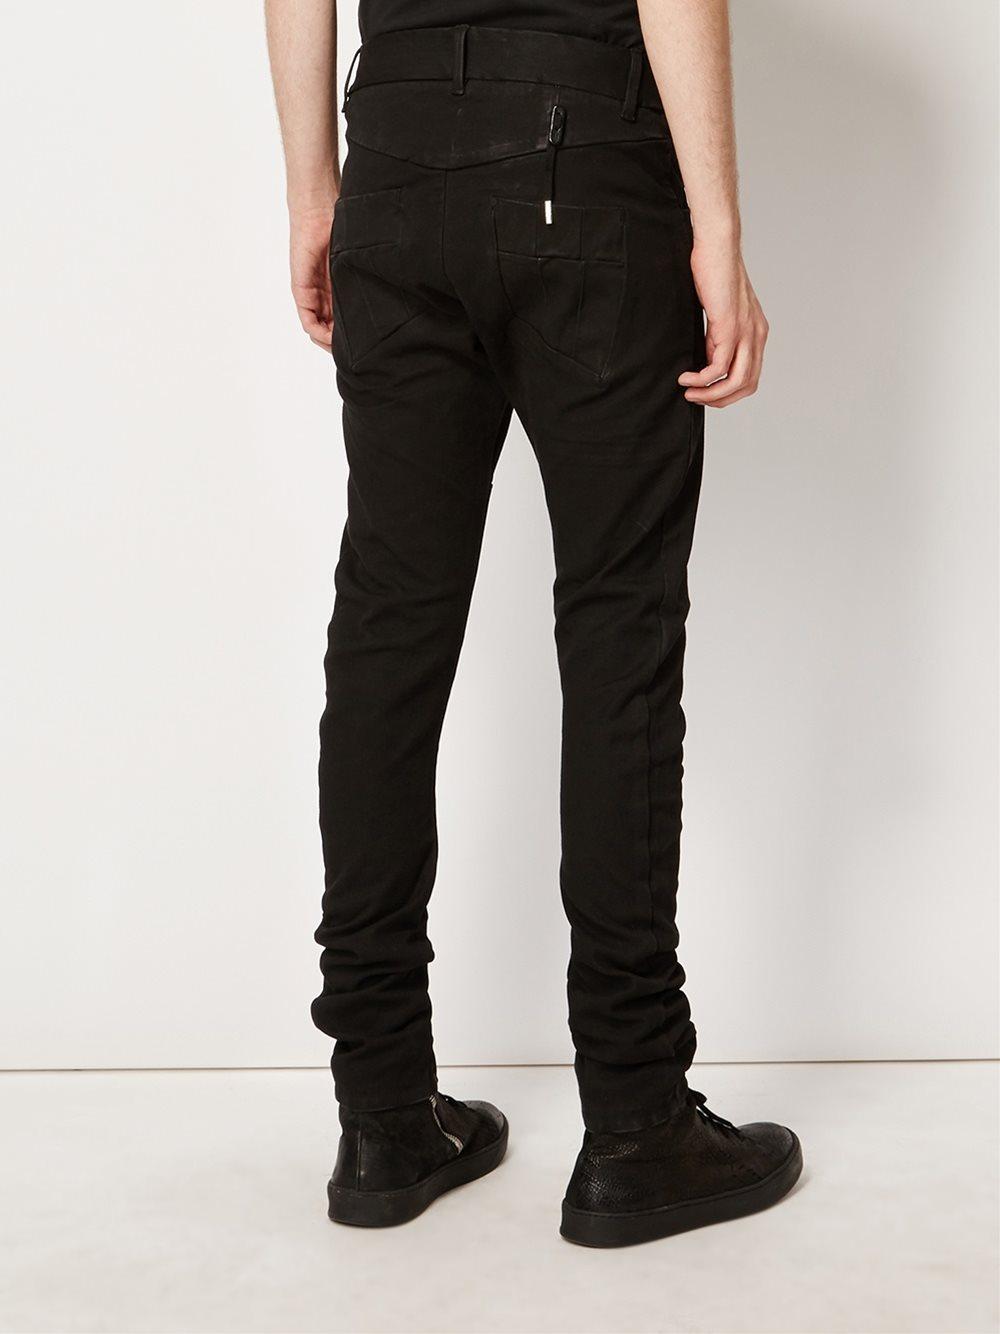 Lyst - Boris Bidjan Saberi Asymmetrical Fly Slim Trousers in Black for Men